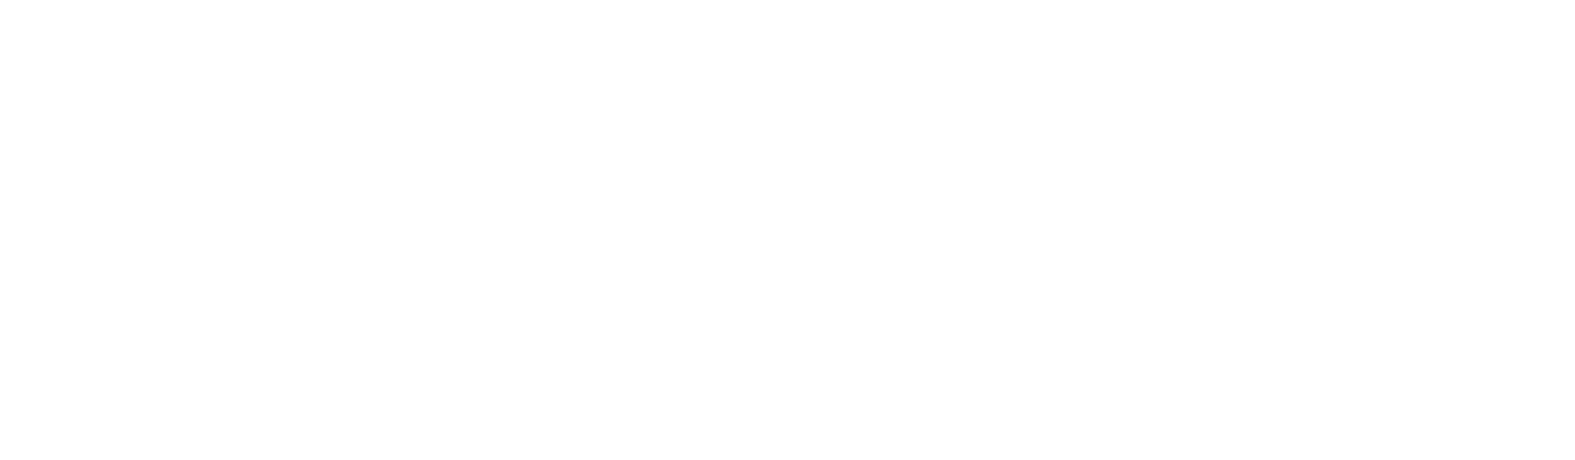 IONOS Group logo pour fonds sombres (PNG transparent)